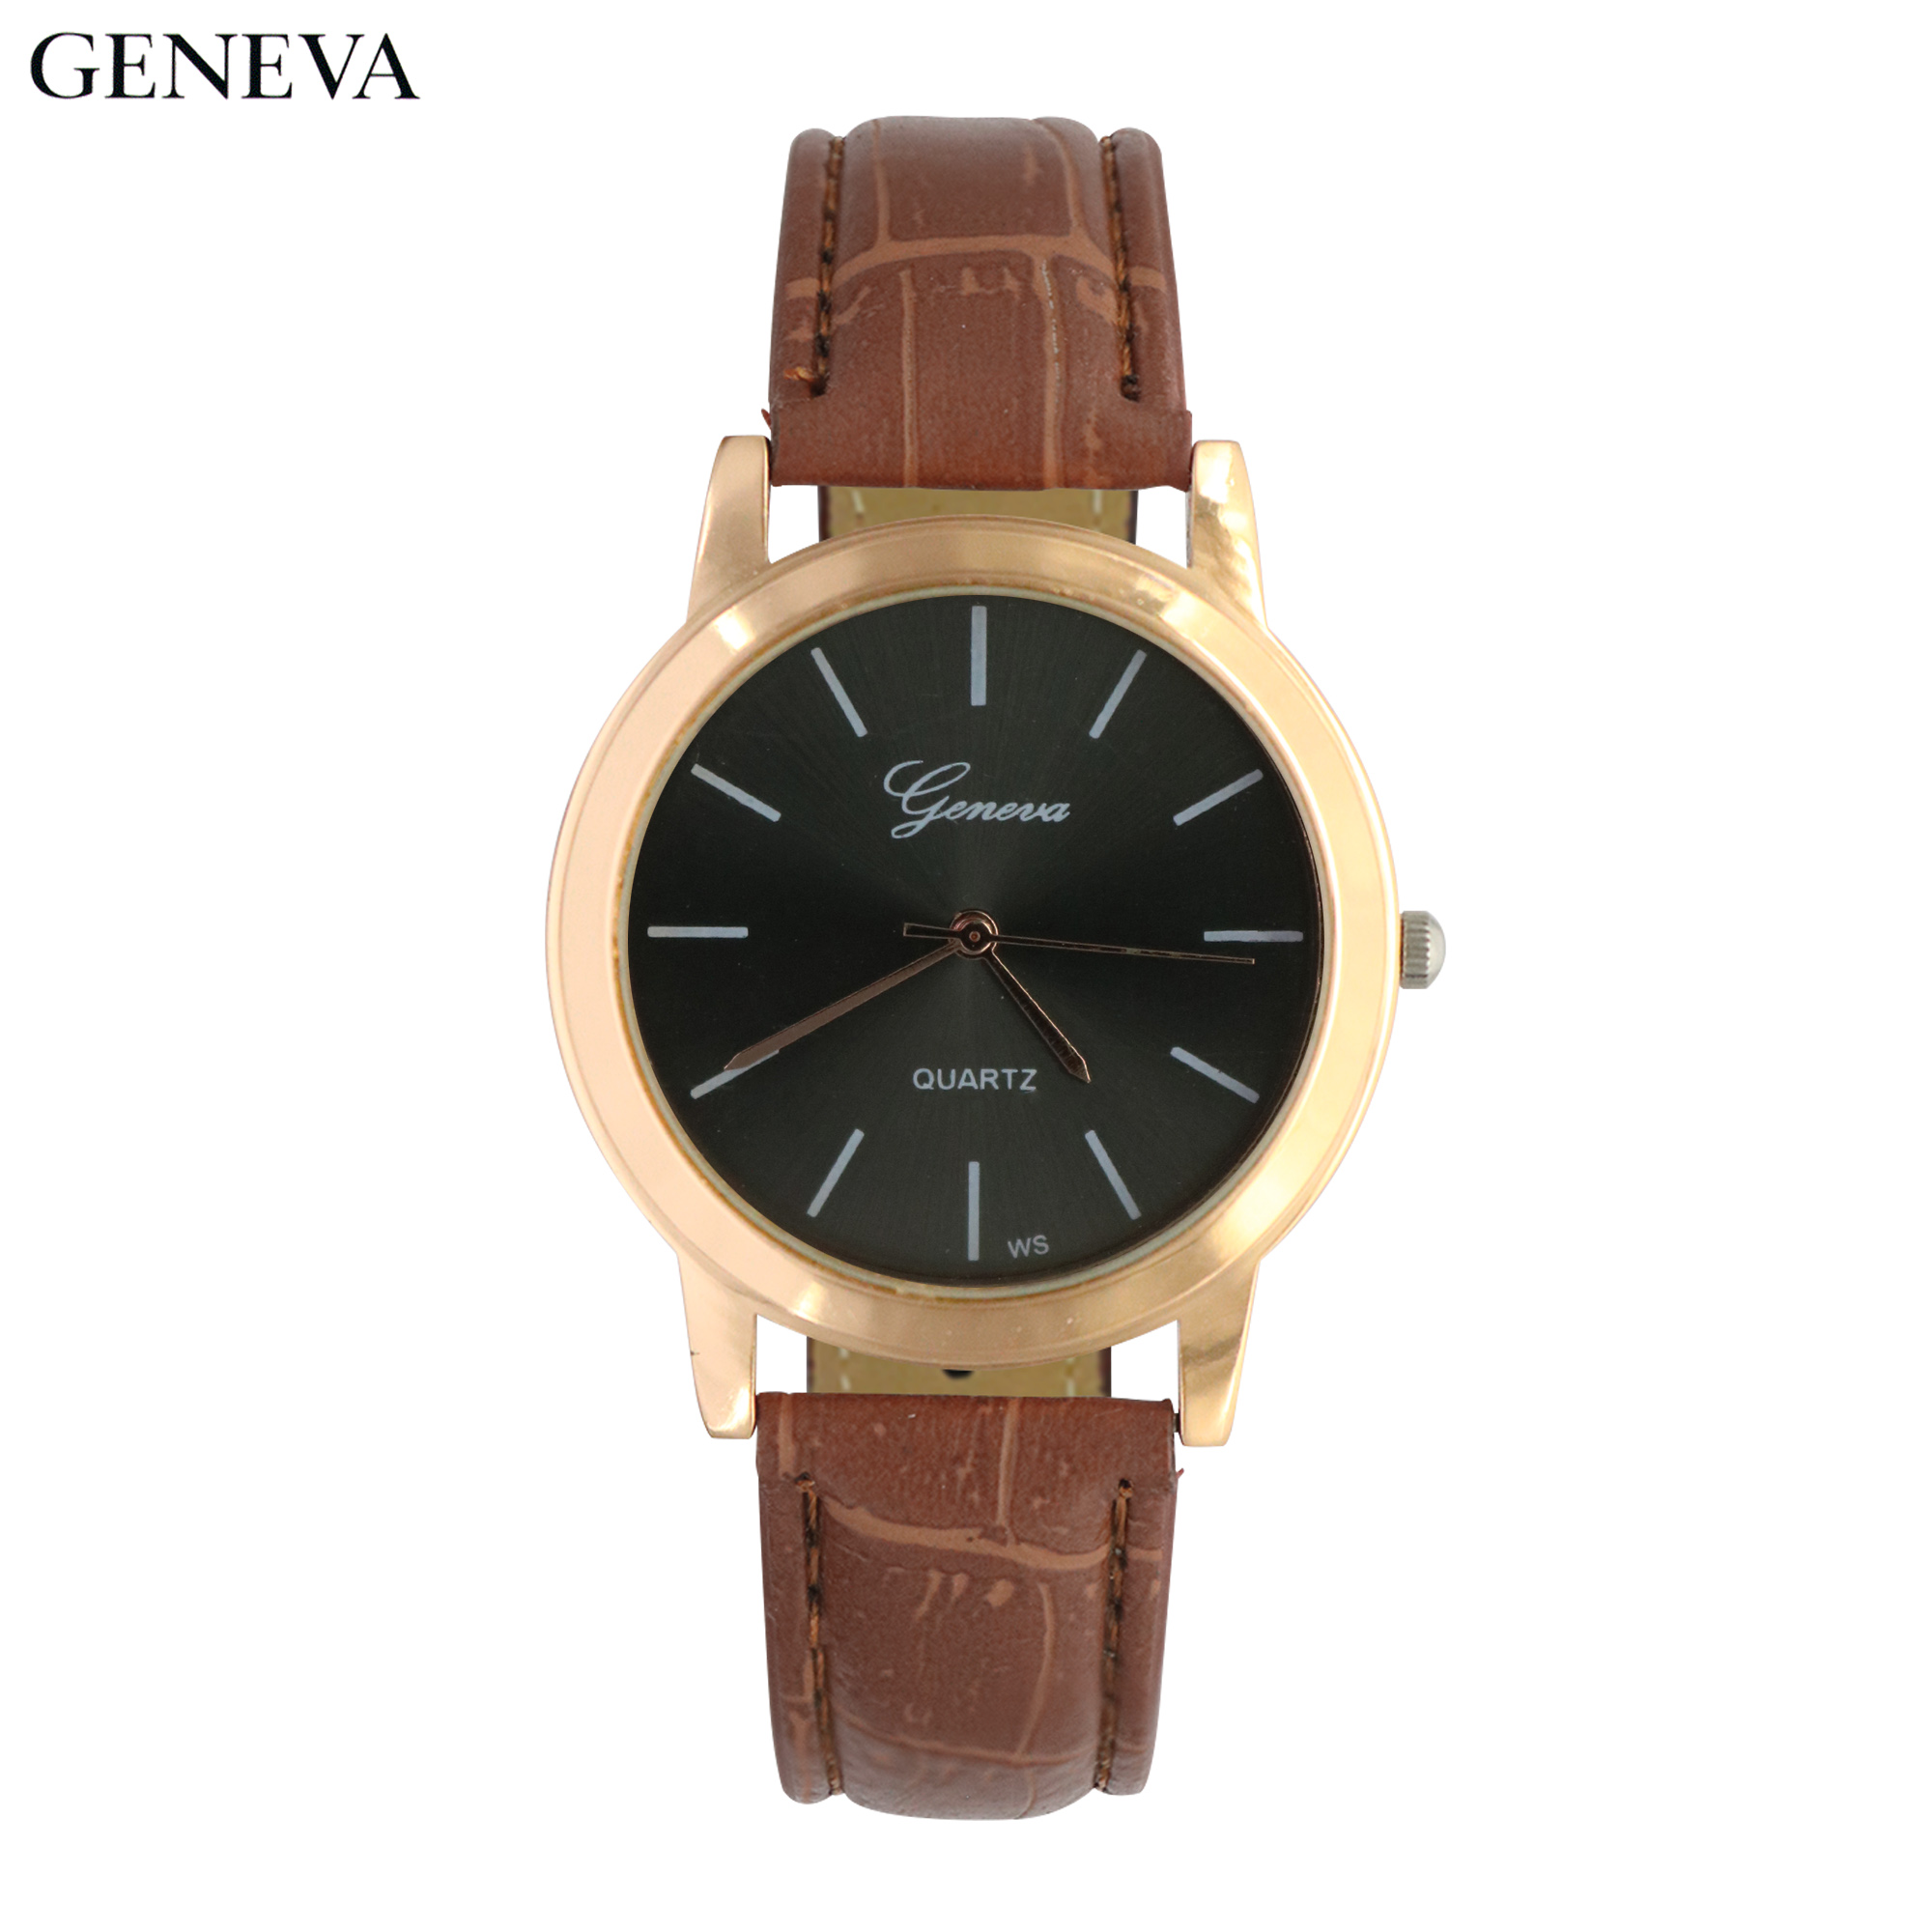 geneva watch